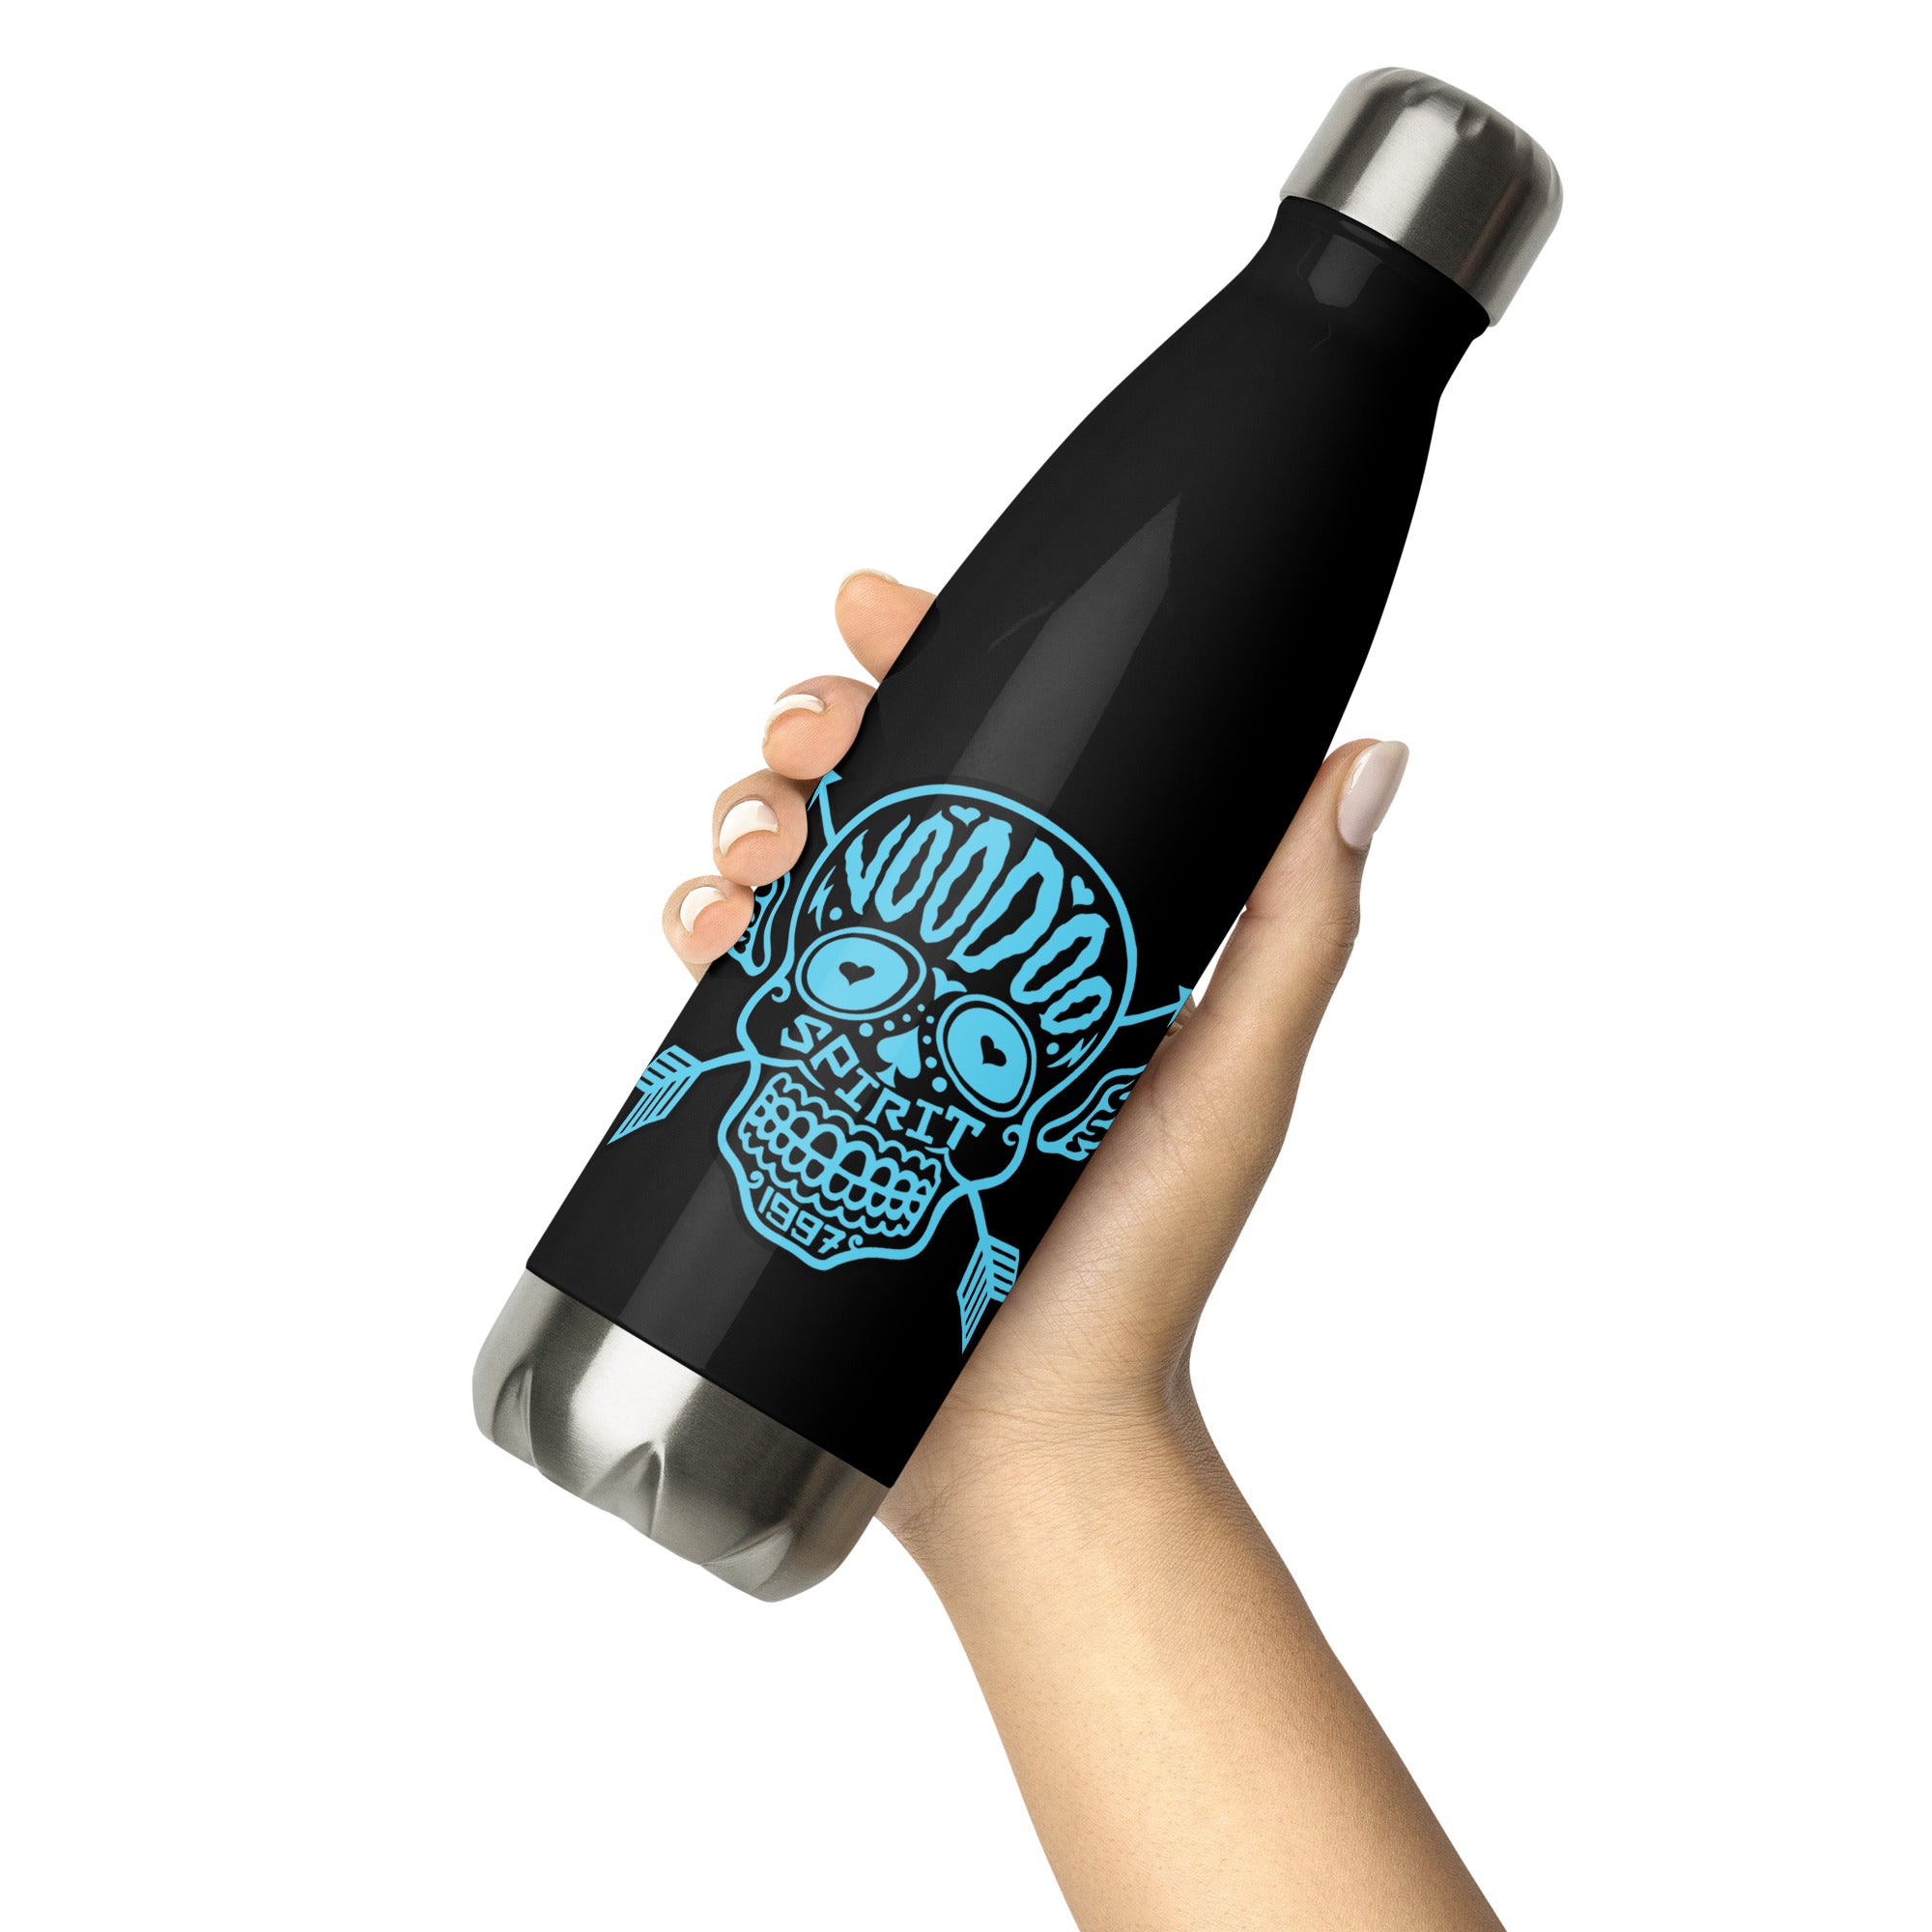 Voodoo Spirit Skull Stainless Steel Water Bottle